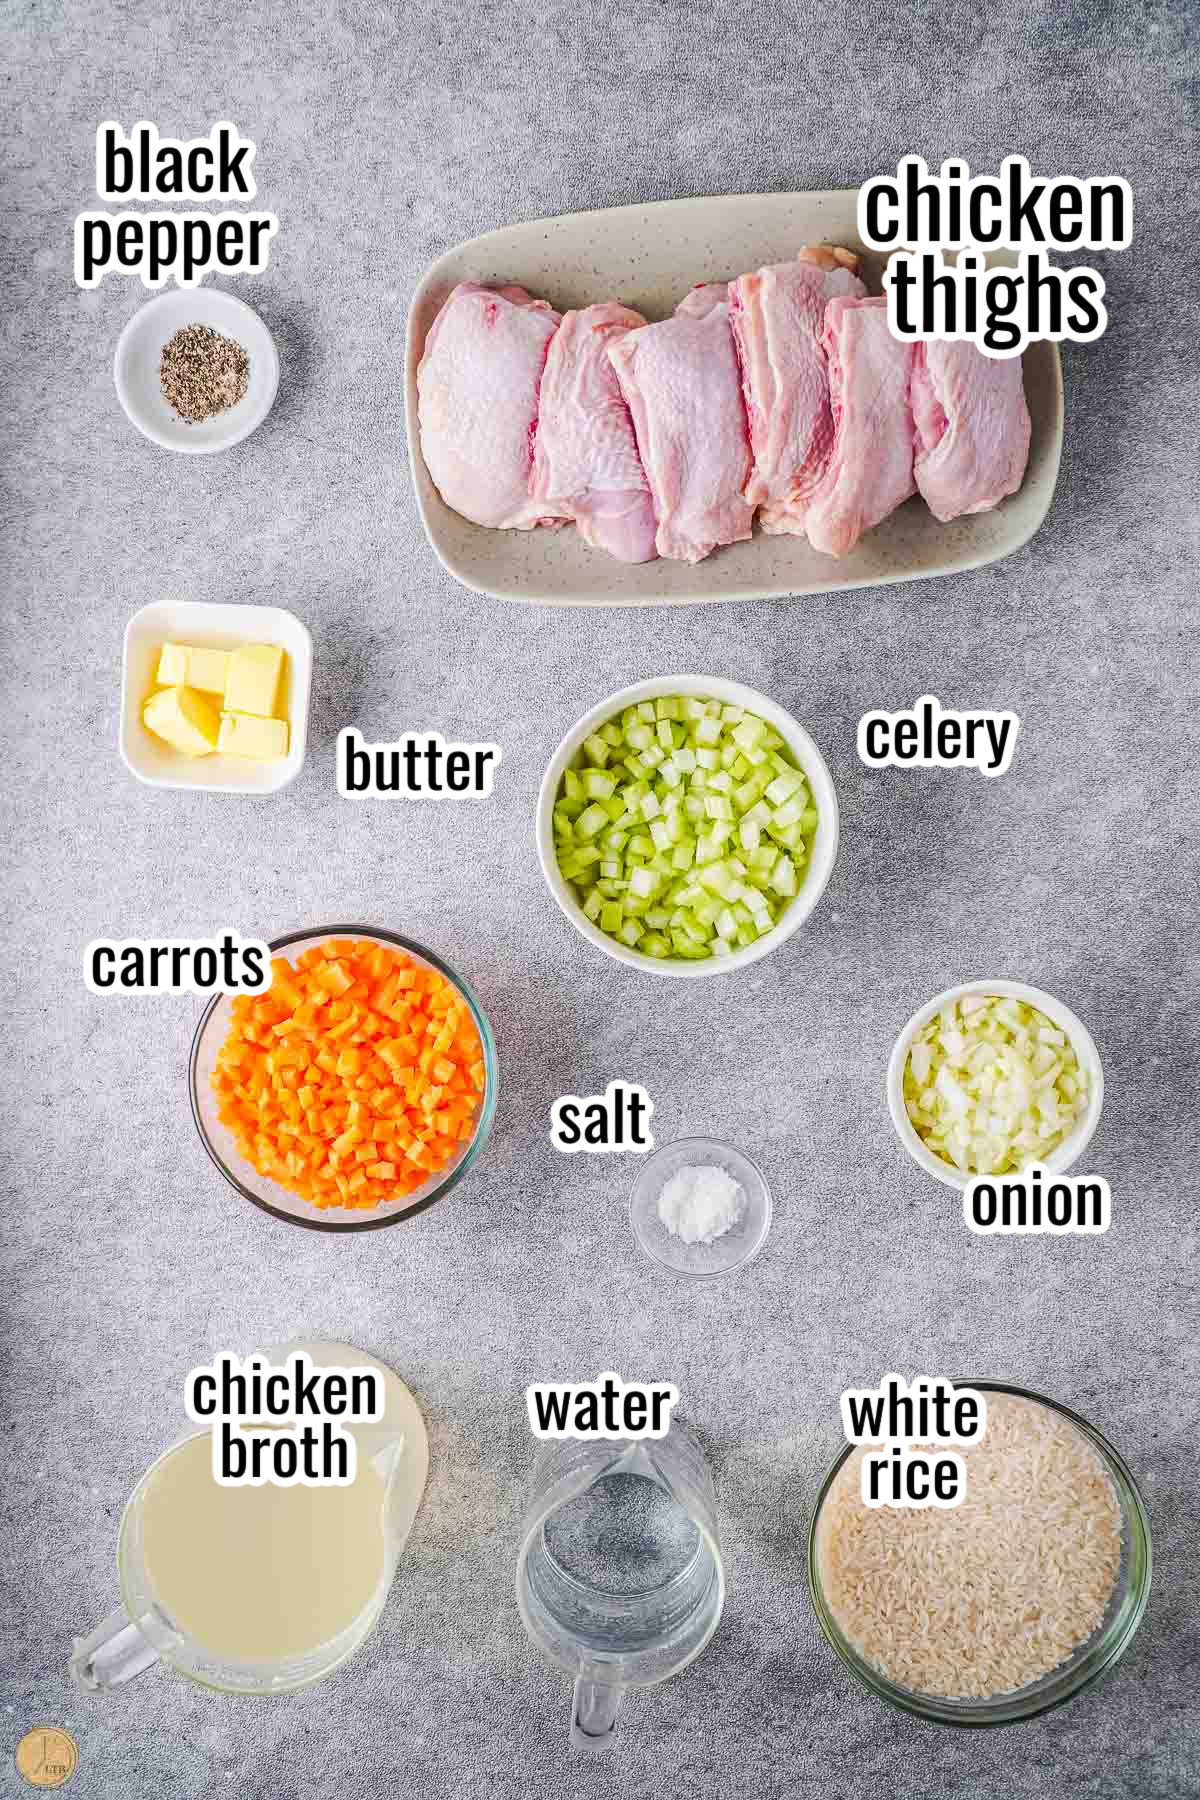 simple ingredients like 1 pound bone-in chicken thighs.